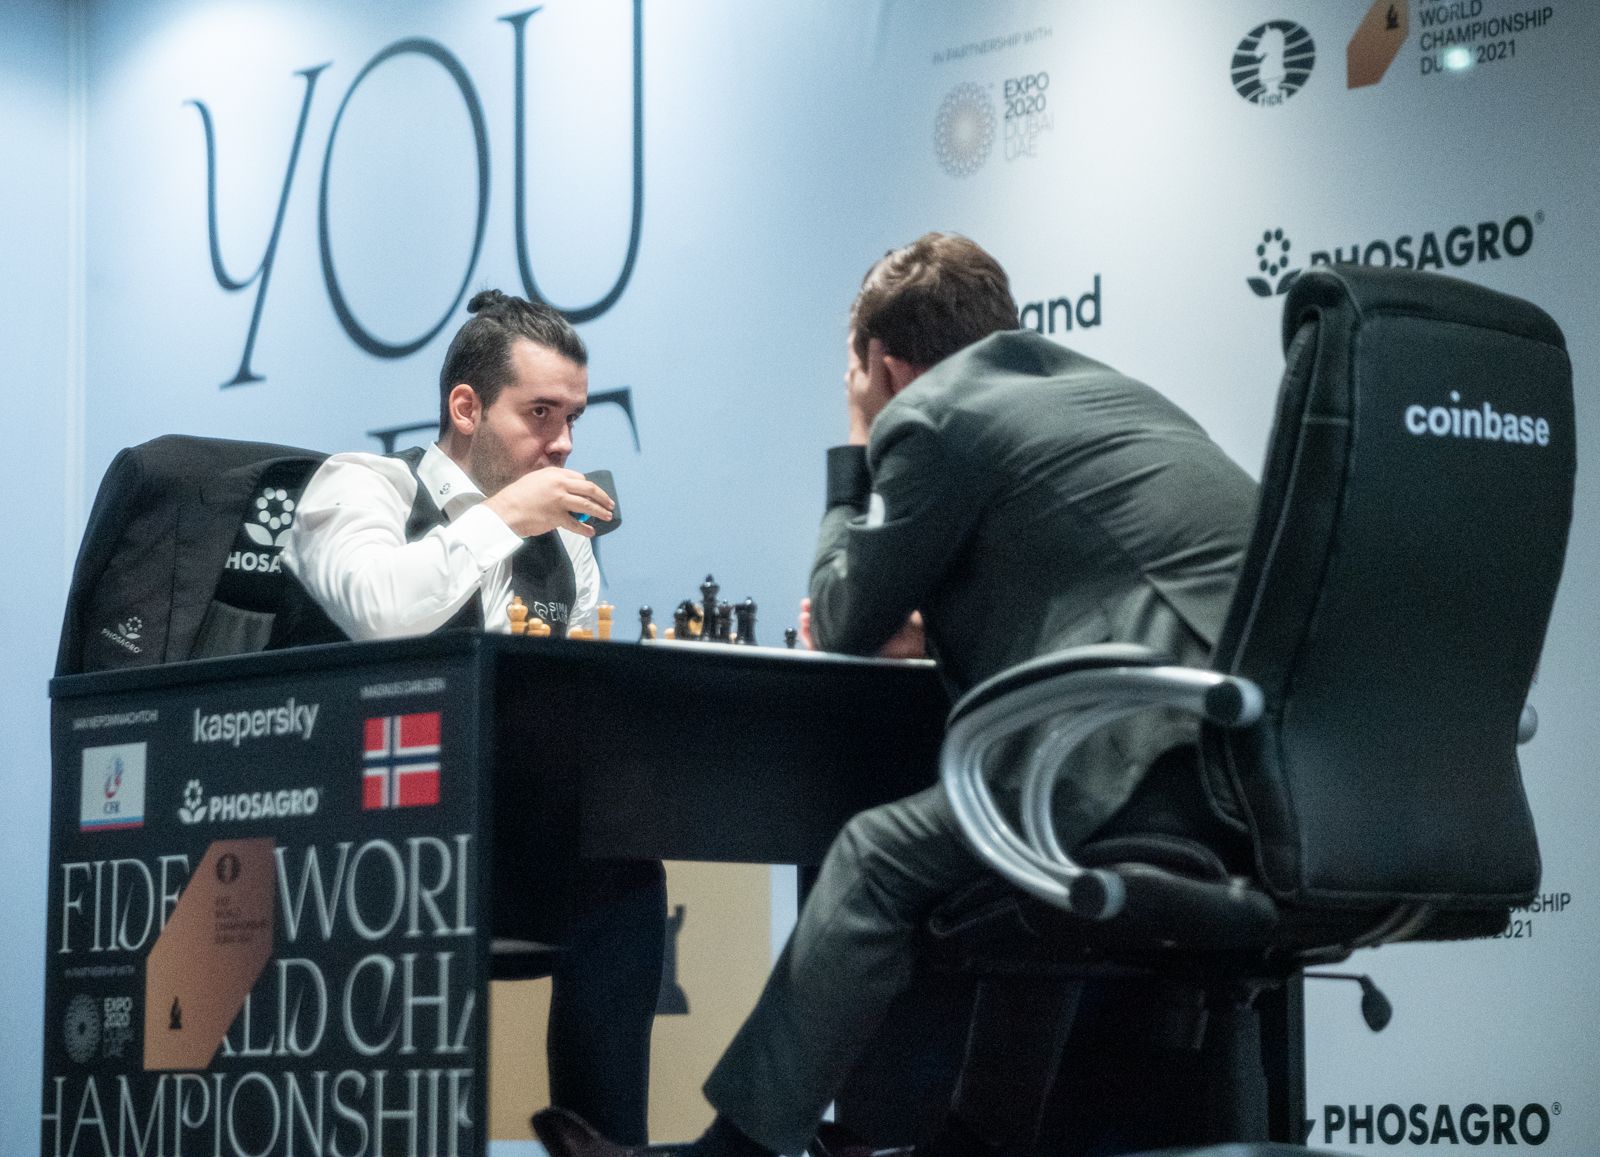 phpPPKPXr - MUNDIAL DE XADREZ FIDE 2021 Acompanhe (GM) Magnus Carlsen x (GM) Ian Nepomniachtchi